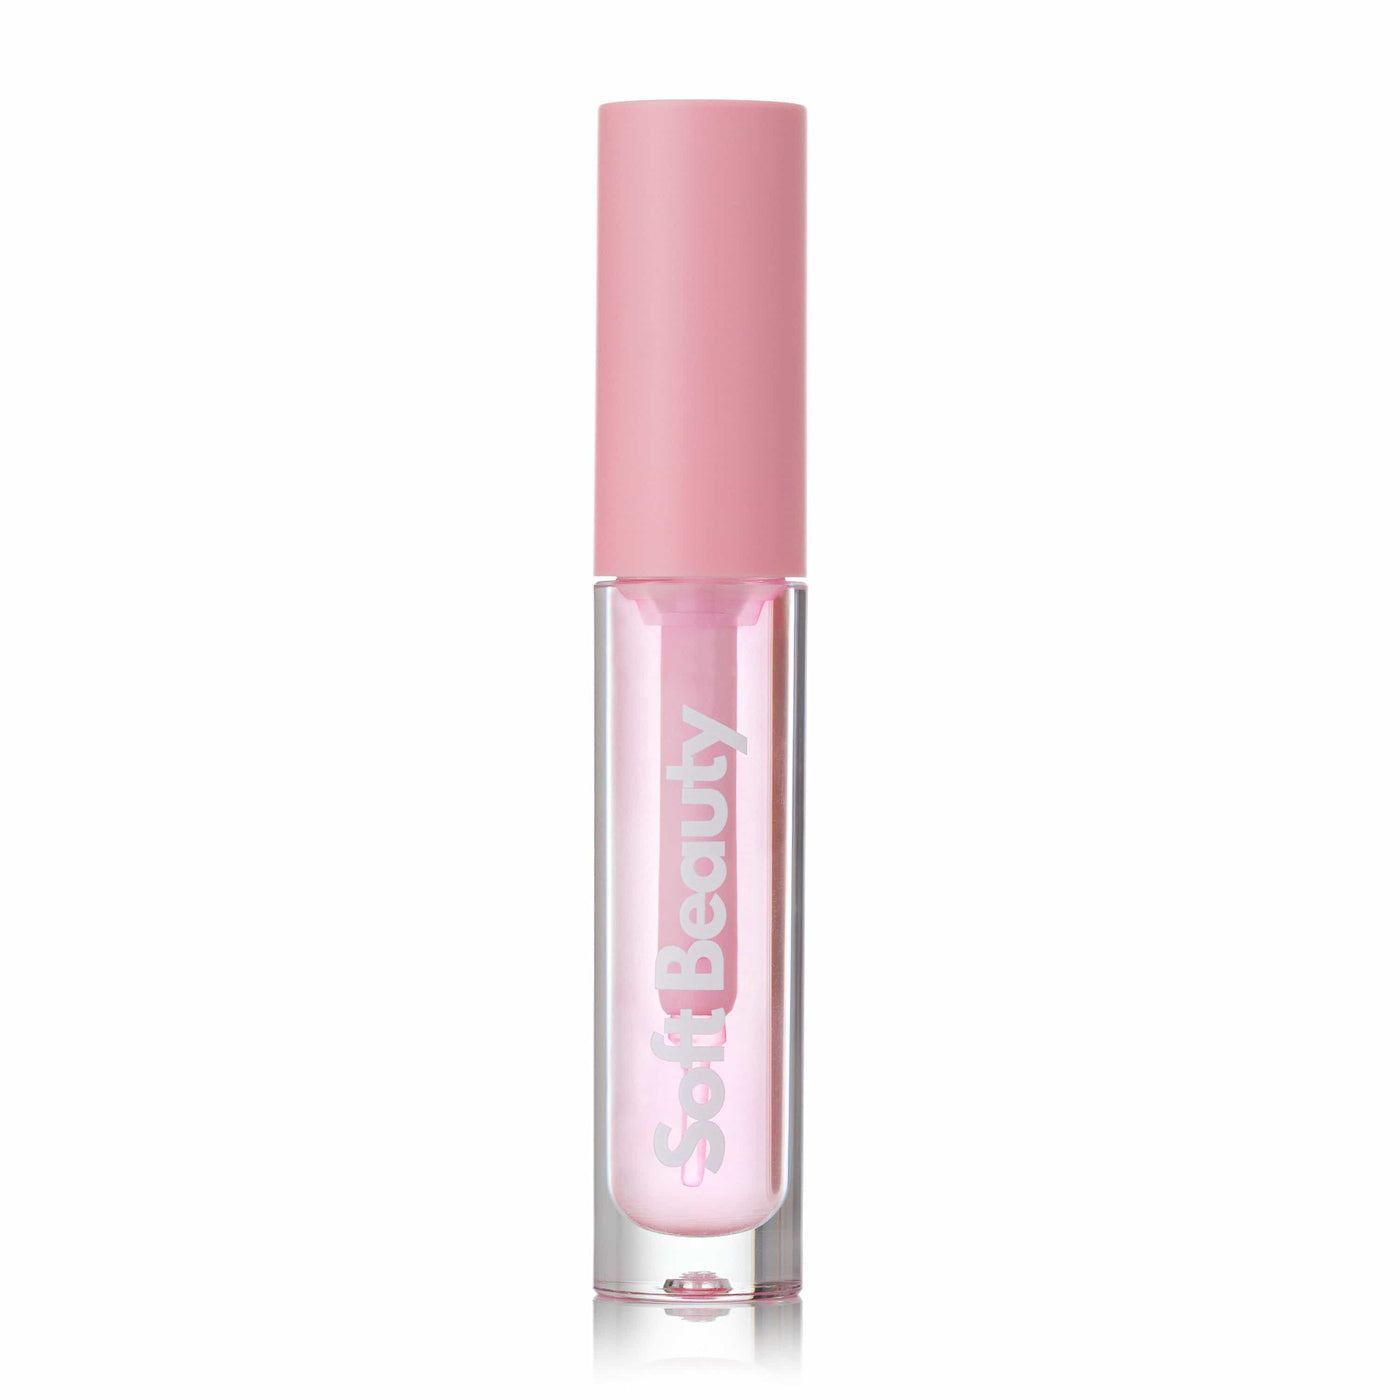 Soft Beauty Lip Makeup - 'Flirty' Candy Lip Oil